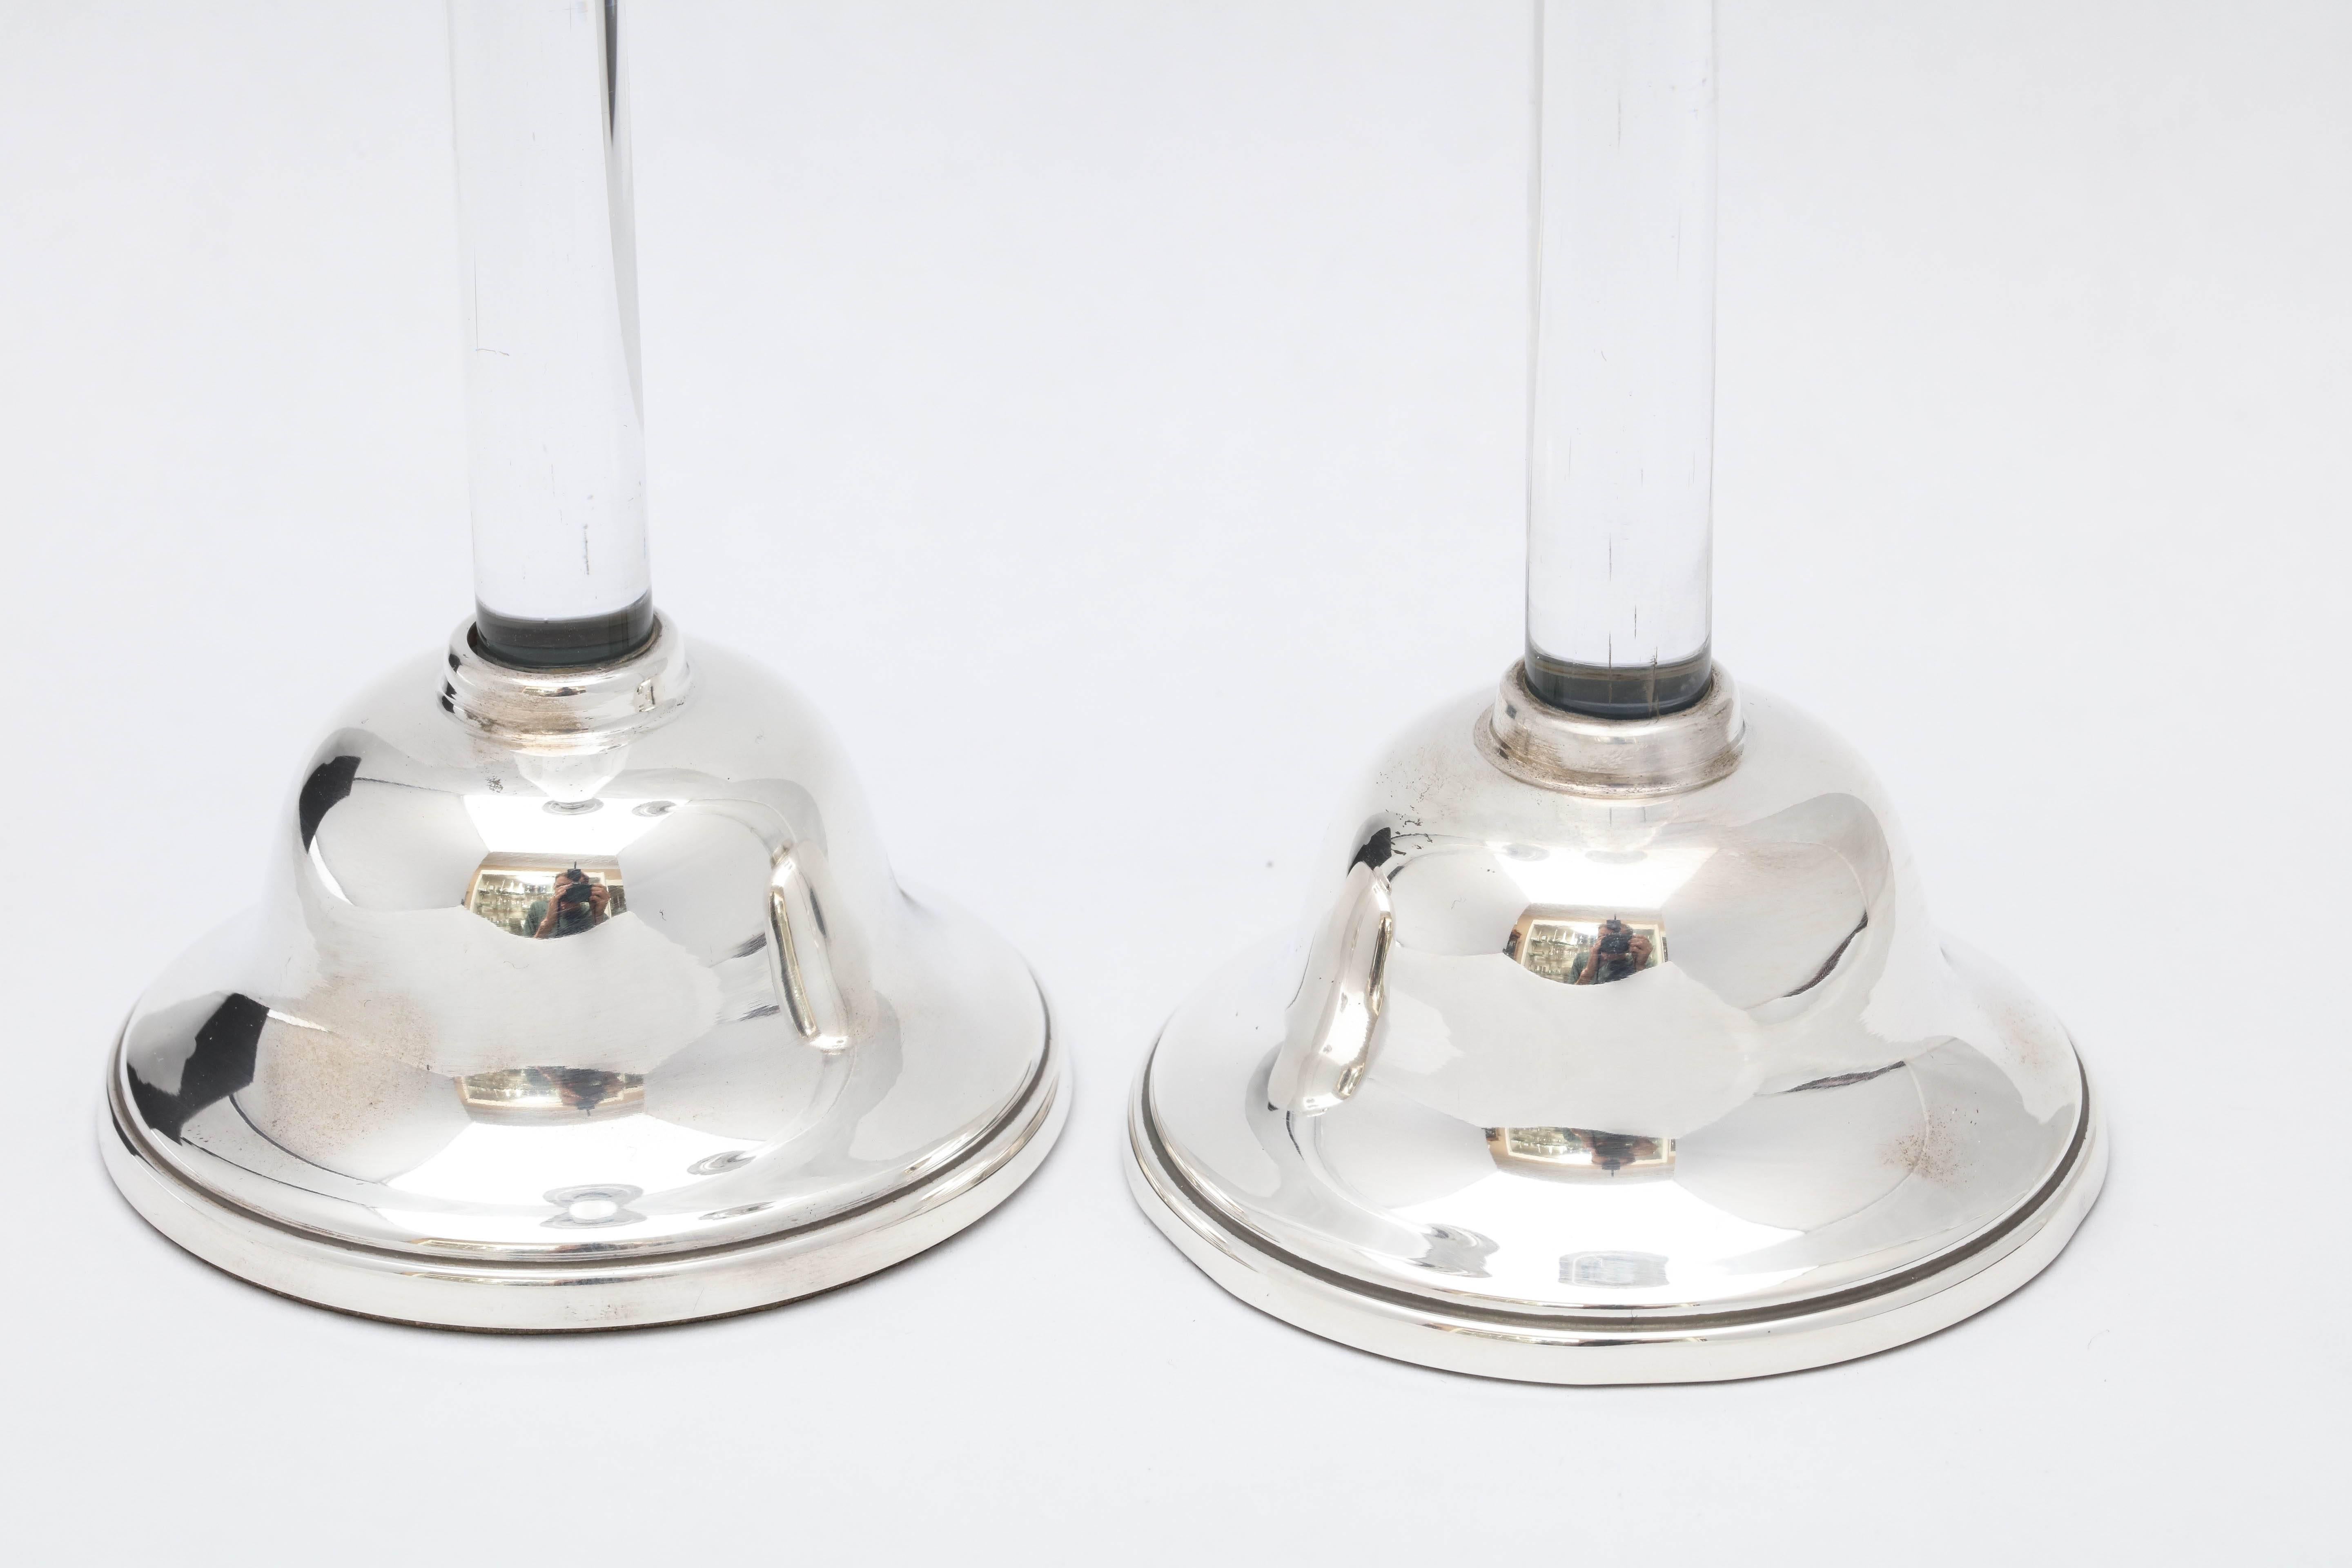 Pair of Mid-Century Modern Sterling Silver-Mounted Crystal Candlesticks (Moderne der Mitte des Jahrhunderts)